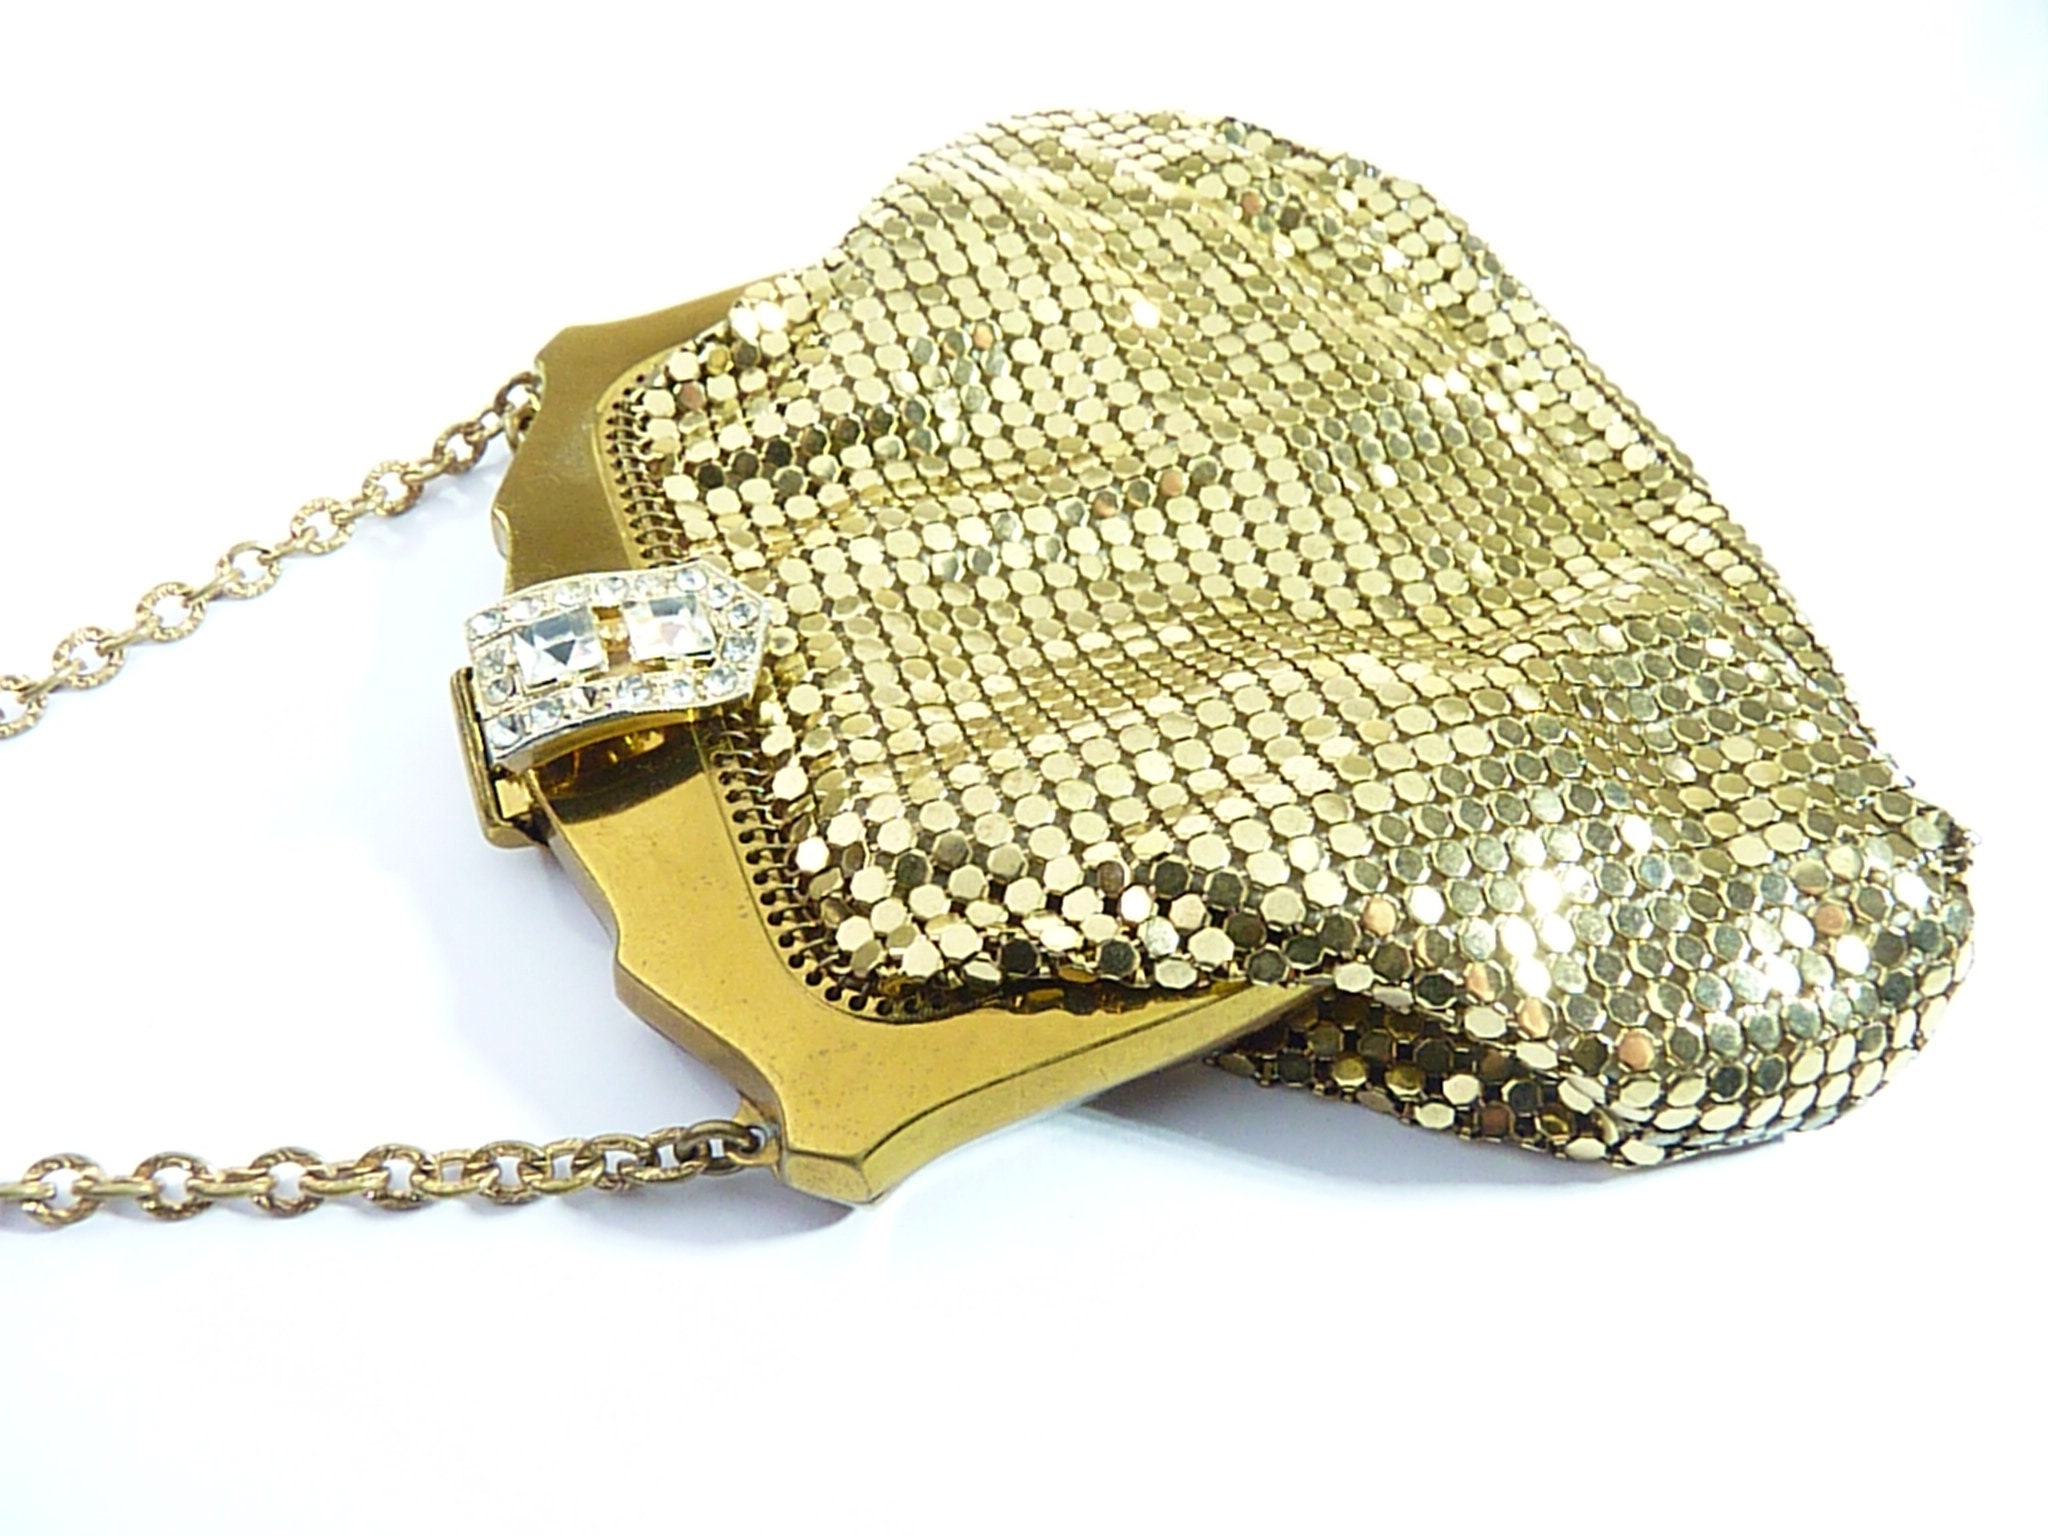 Vintage handbags gold mesh purse 1940s WHITING & DAVIS PURSE | Etsy